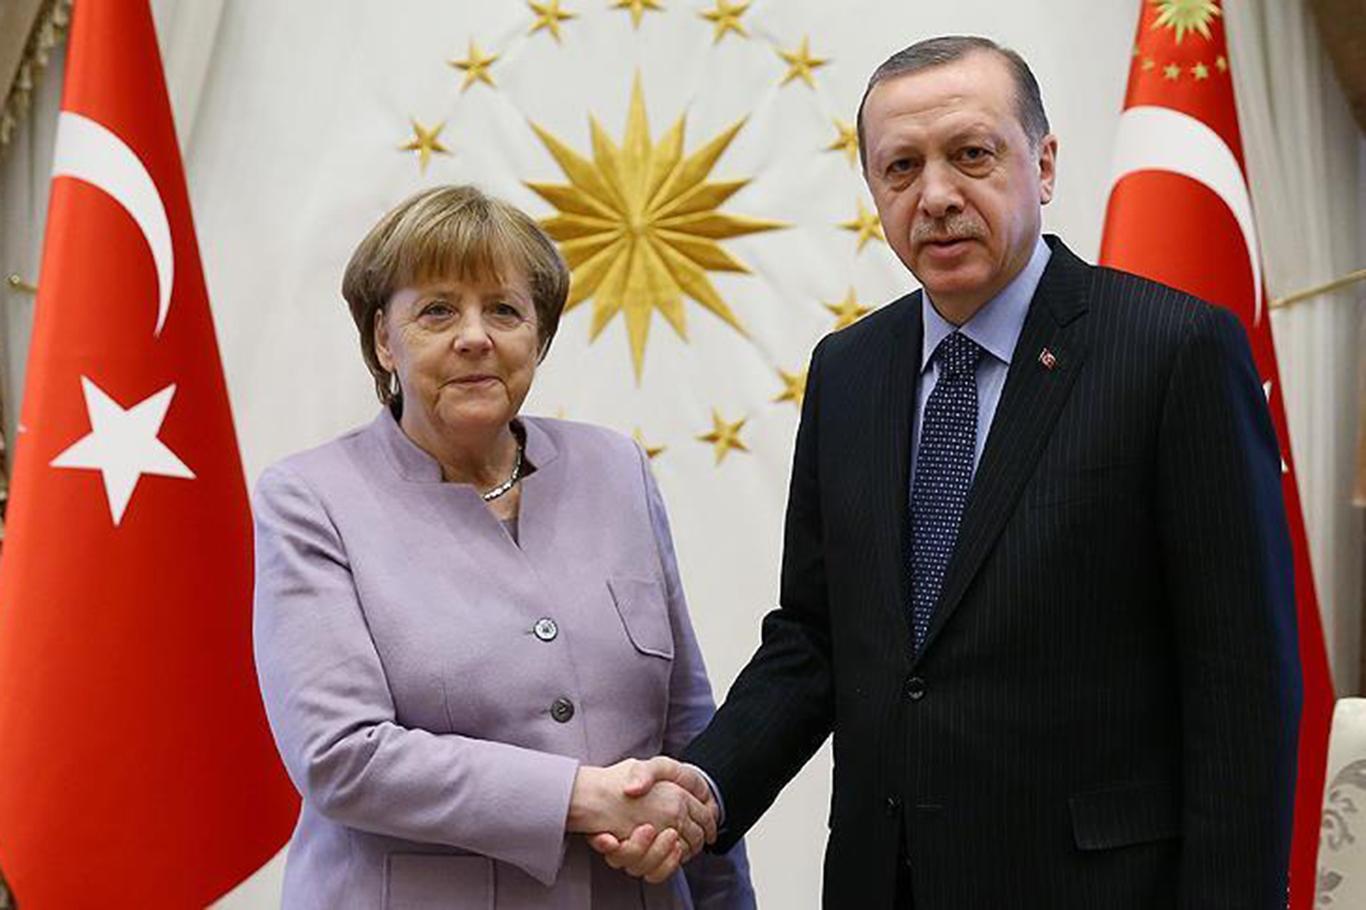 Erdoğan, German Chancellor Merkel talk over phone